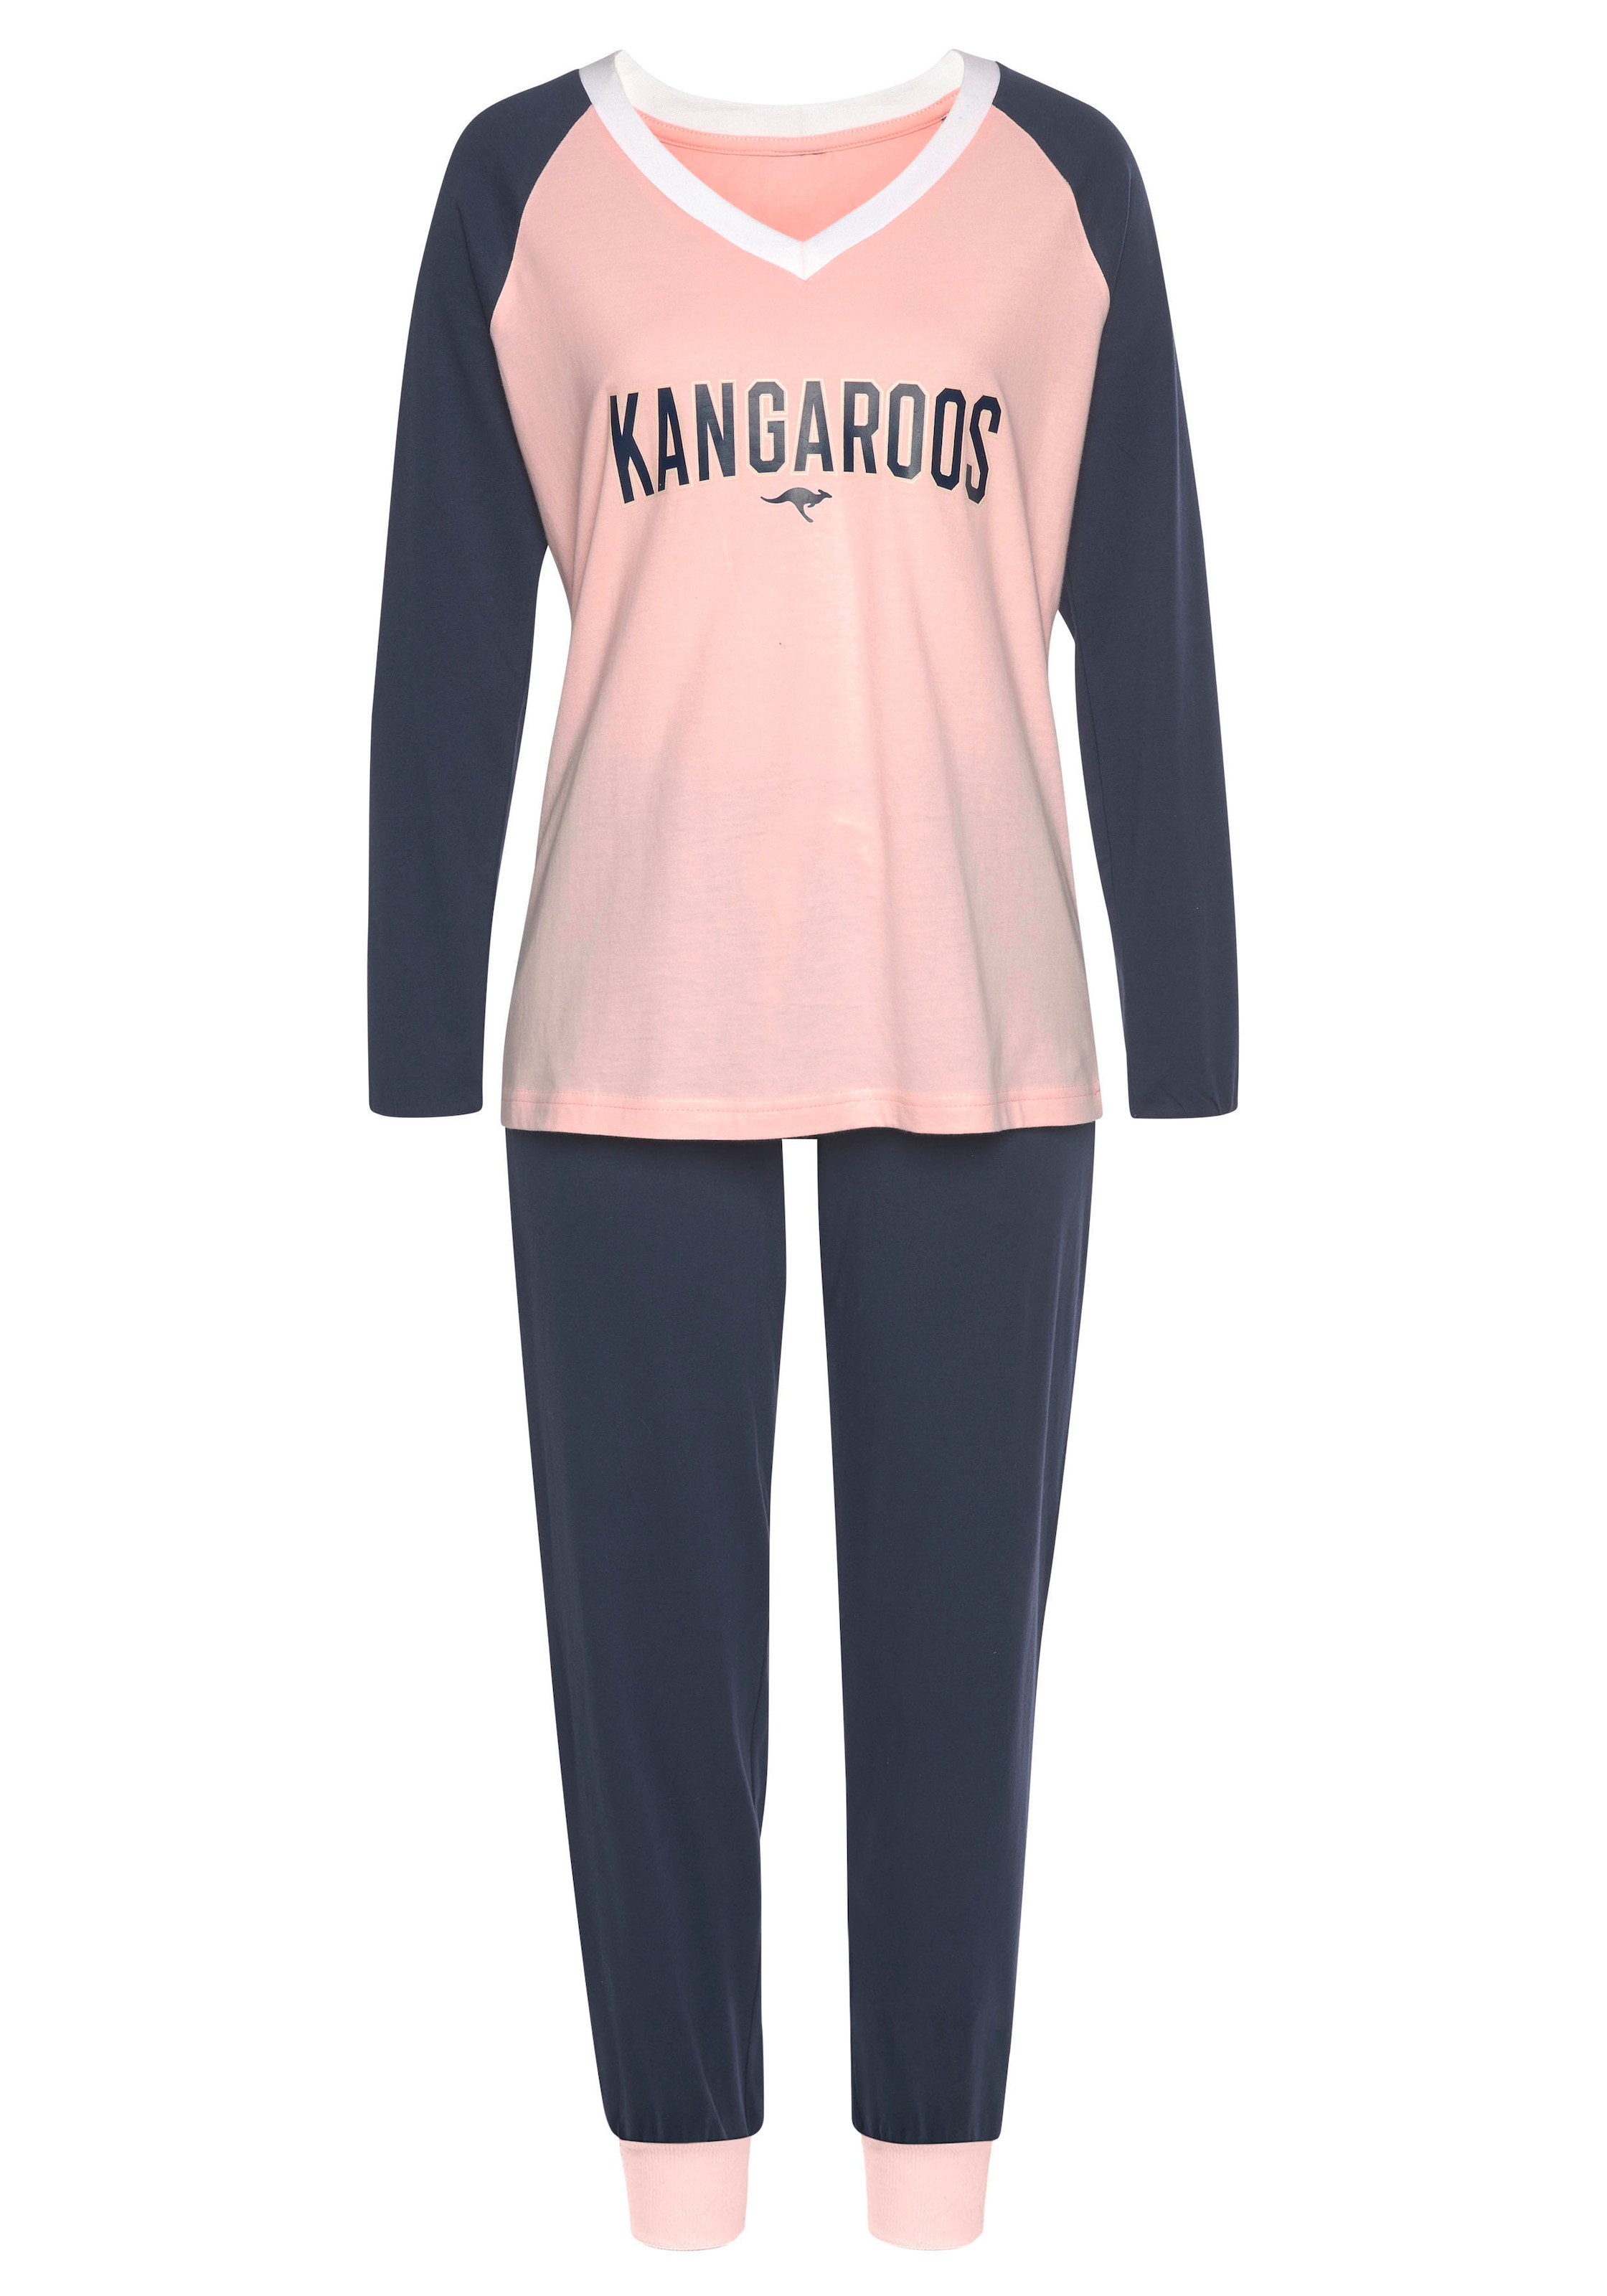 tlg., OTTO 1 Online Raglanärmeln Shop im mit (2 Stück), Pyjama, kontrastfarbenen KangaROOS